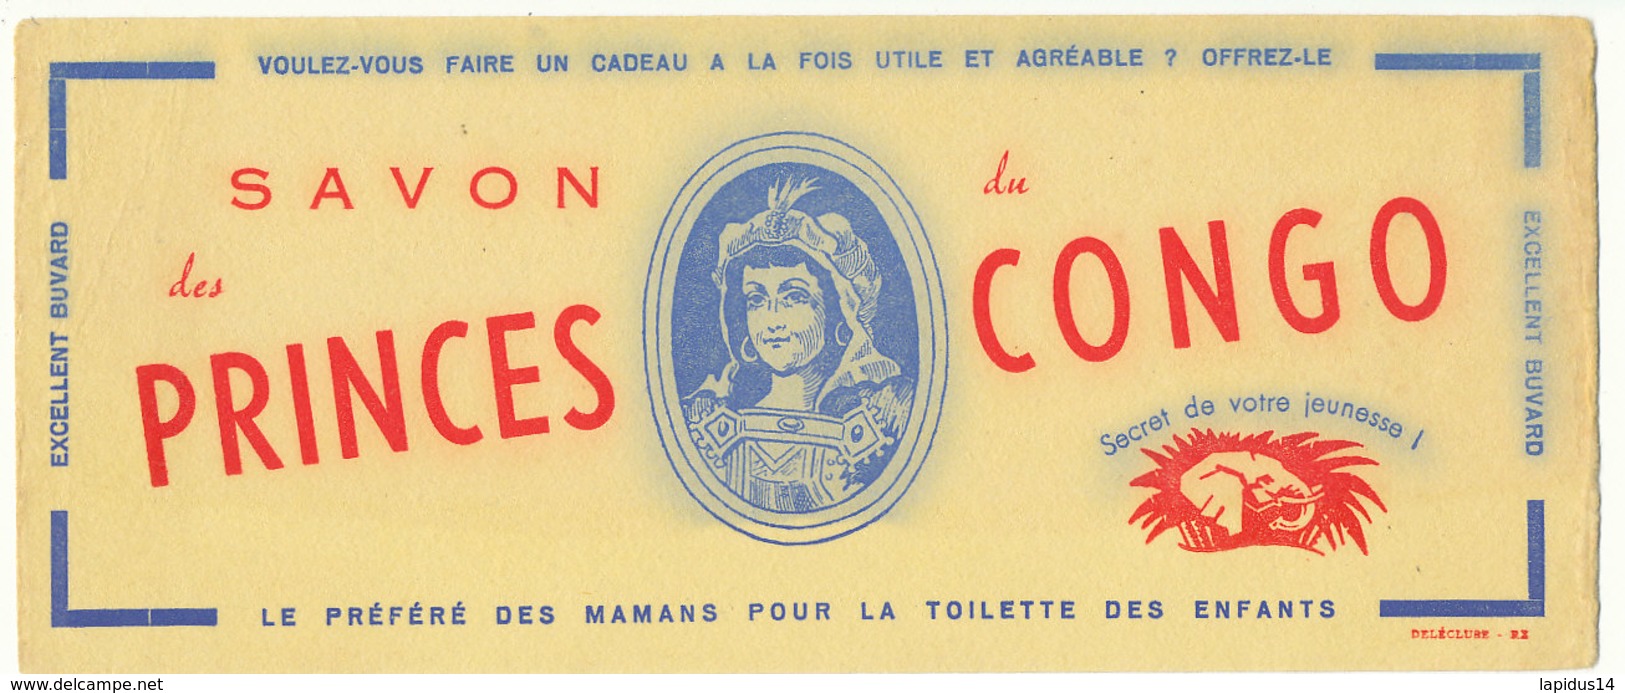 BU 1538 -/  BUVARD   SAVON  DES PRINCES CONGO - Parfums & Beauté